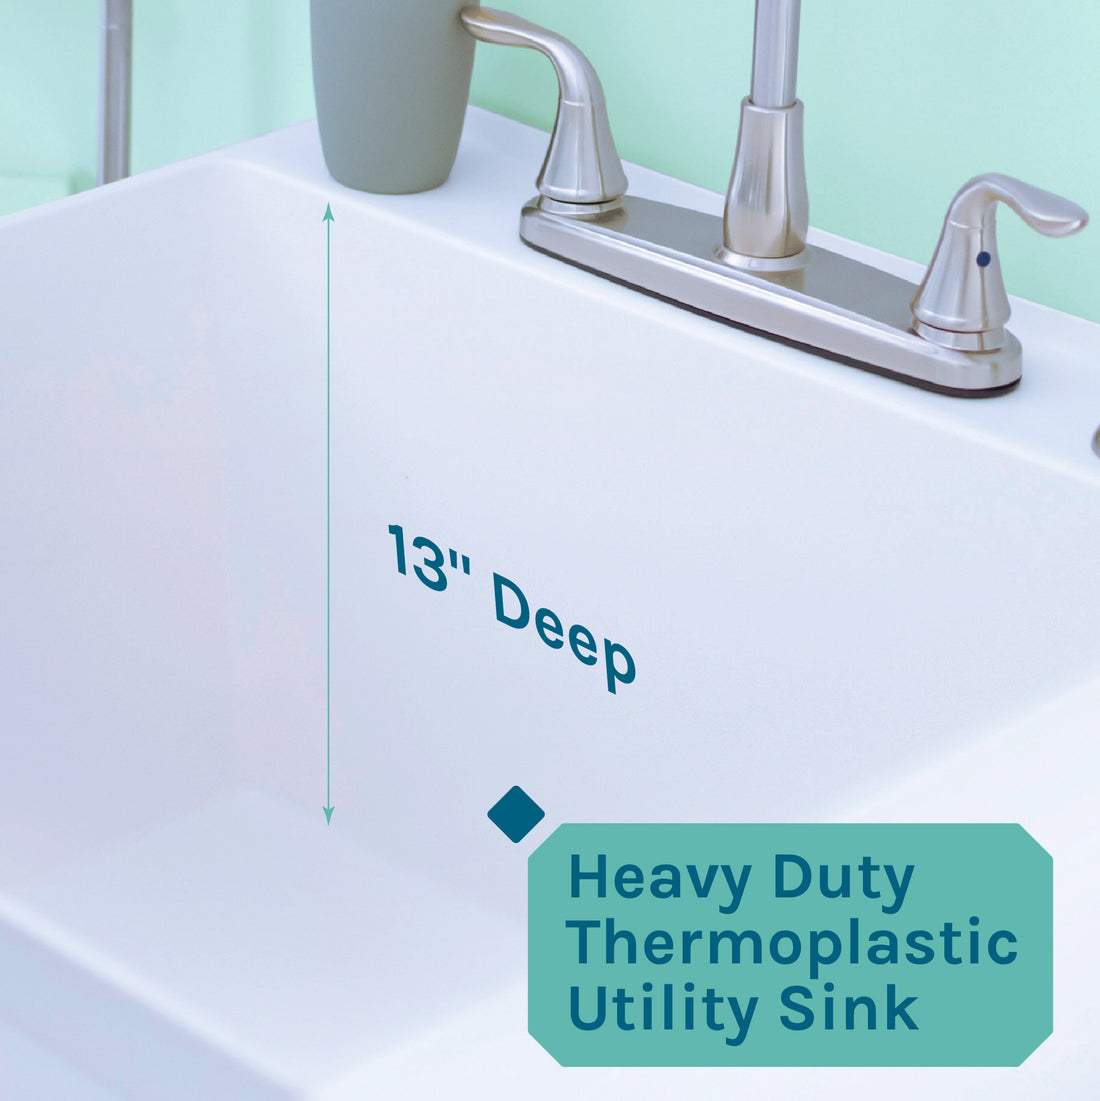 Tehila Standard Freestanding White Utility Sink with Grey Legs and Stainless Steel Finish Wide-set Gooseneck Faucet with Side Sprayer - Utility sinks vanites Tehila